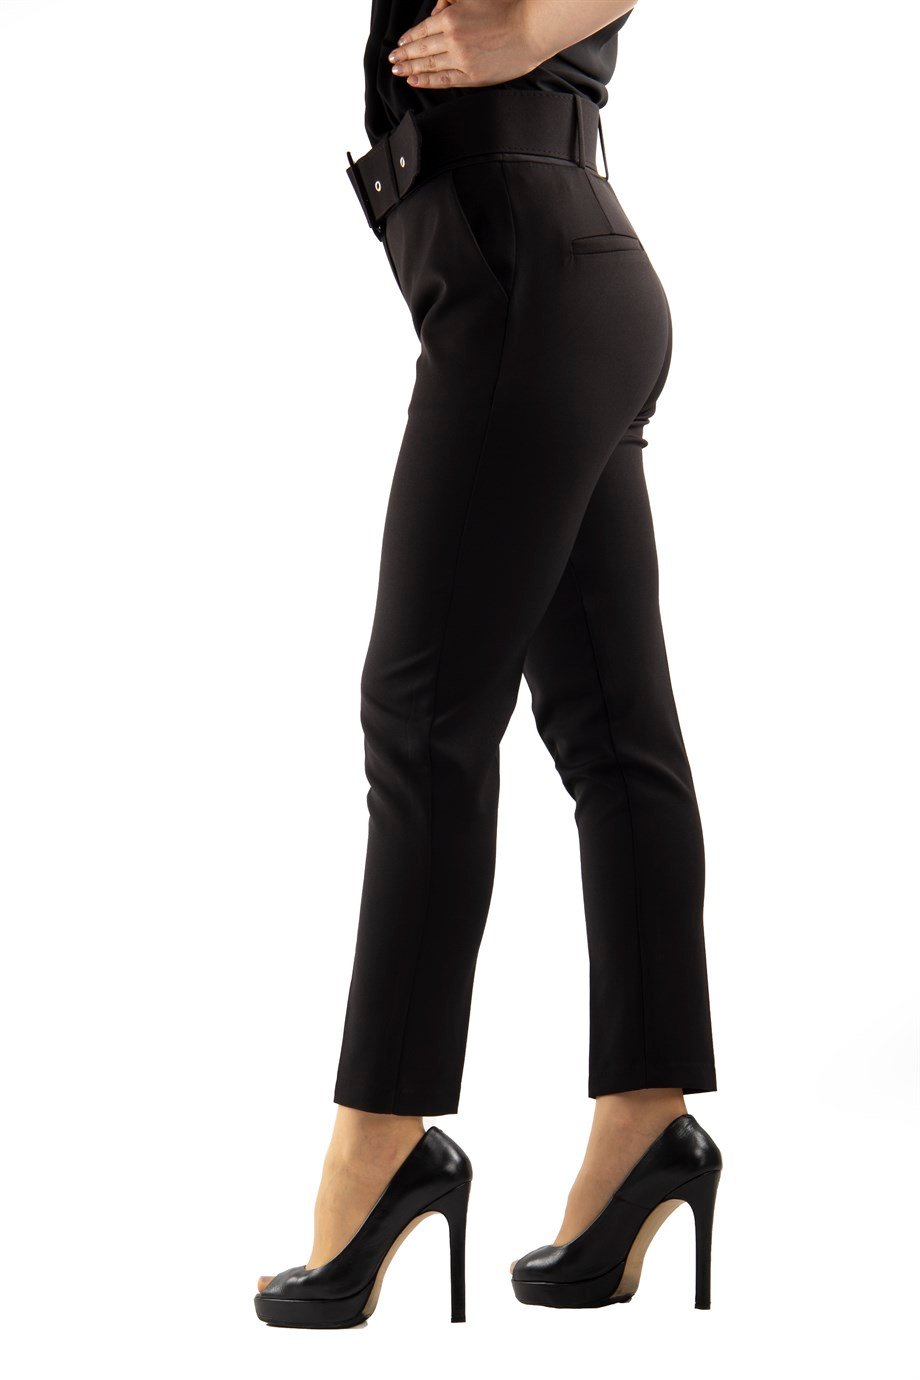 Ladies Black Office Wear Pants  Black Women Office Wear Pants - Office  Lady Wear - Aliexpress